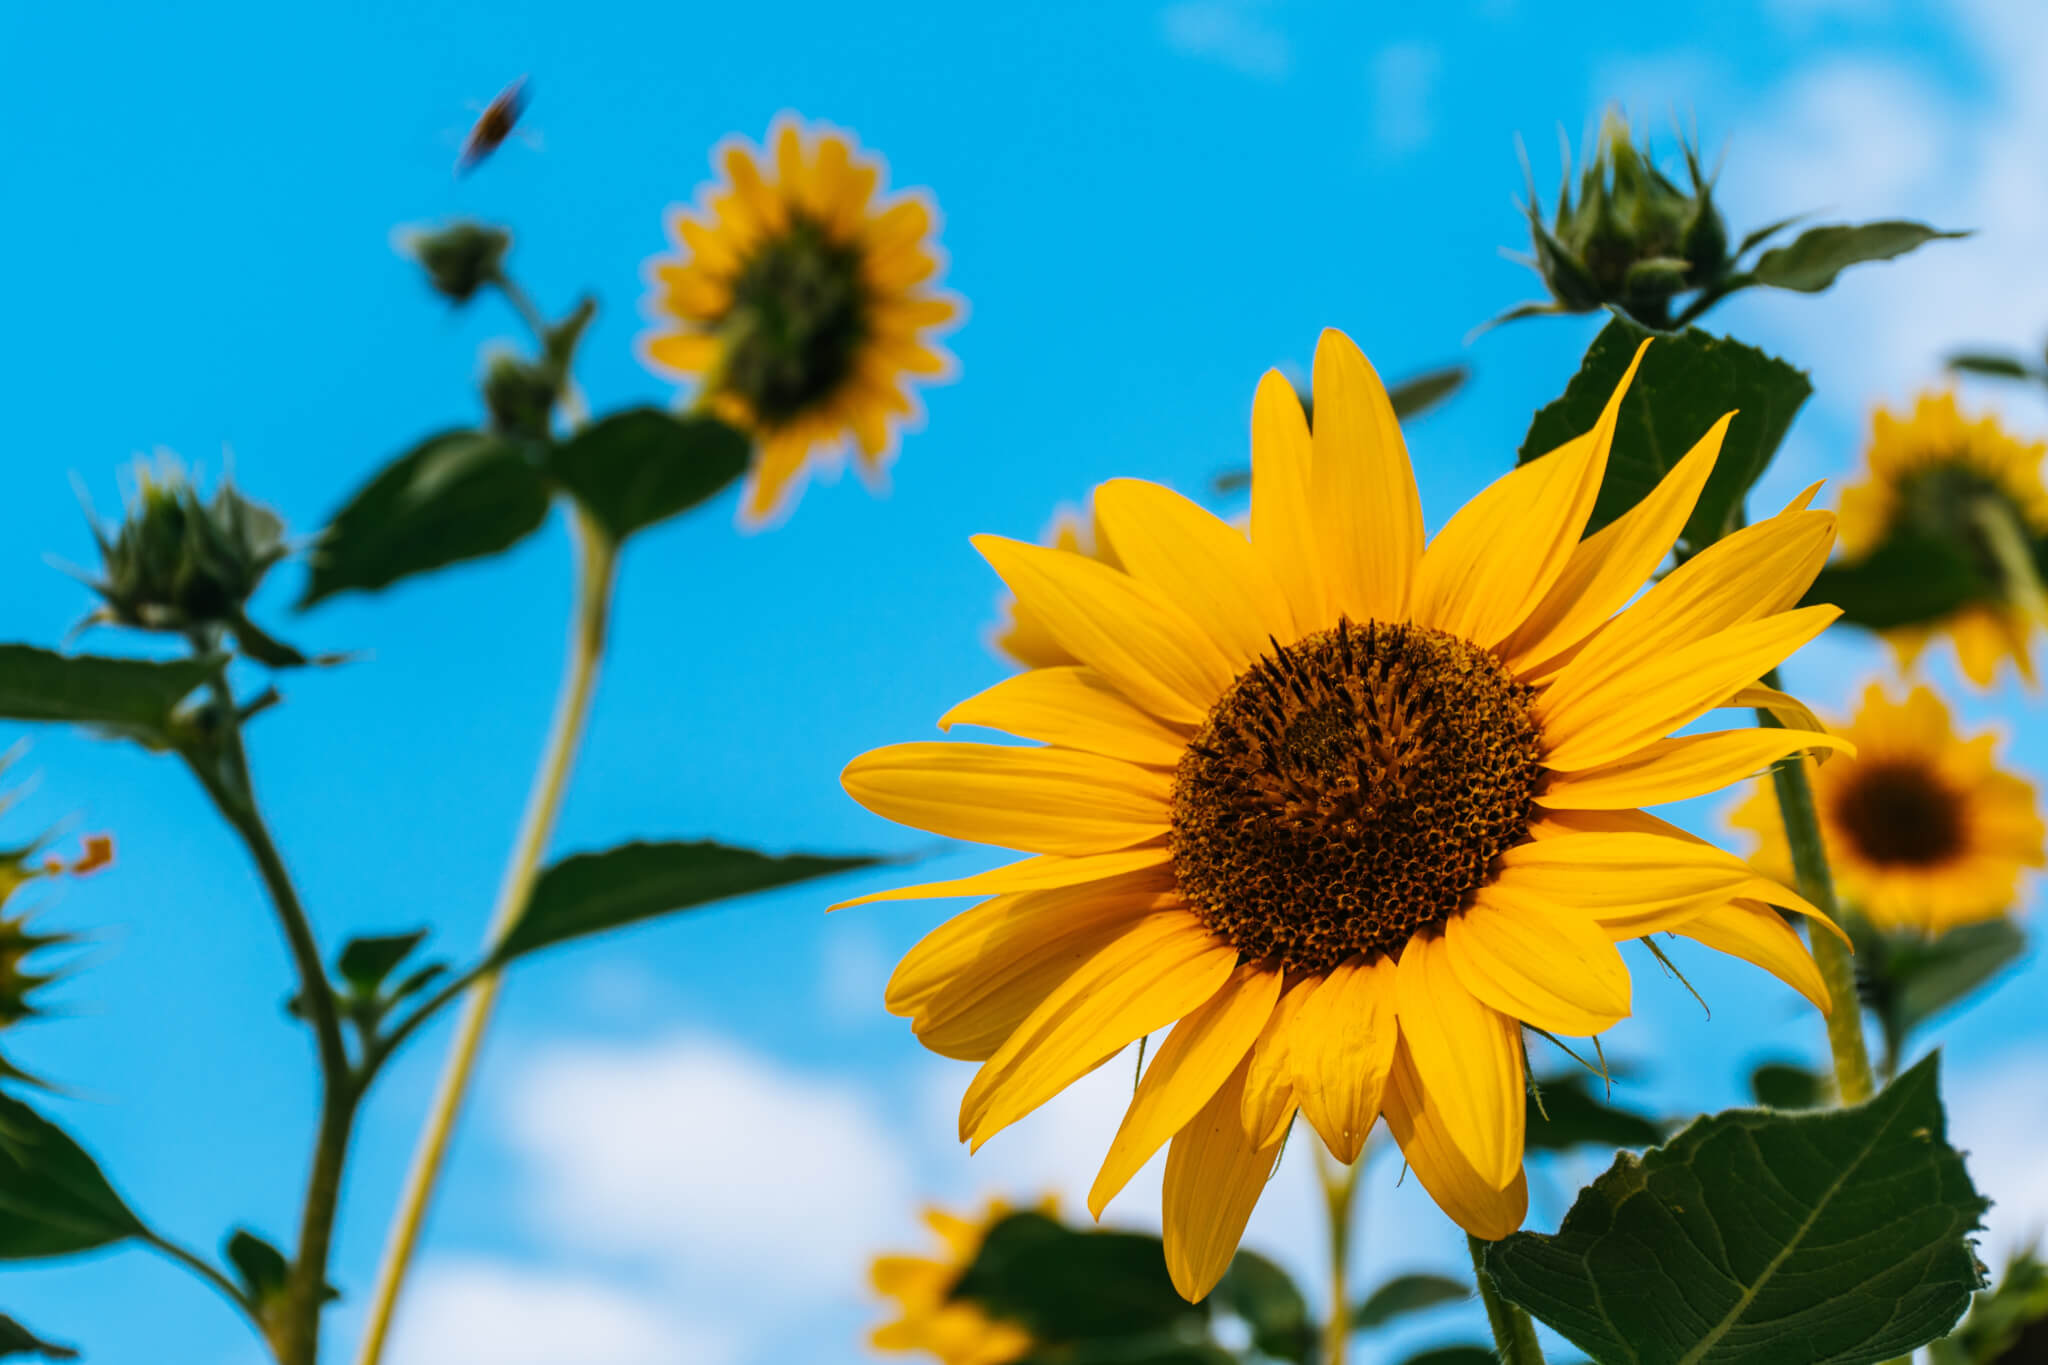 sunflower and blue sky